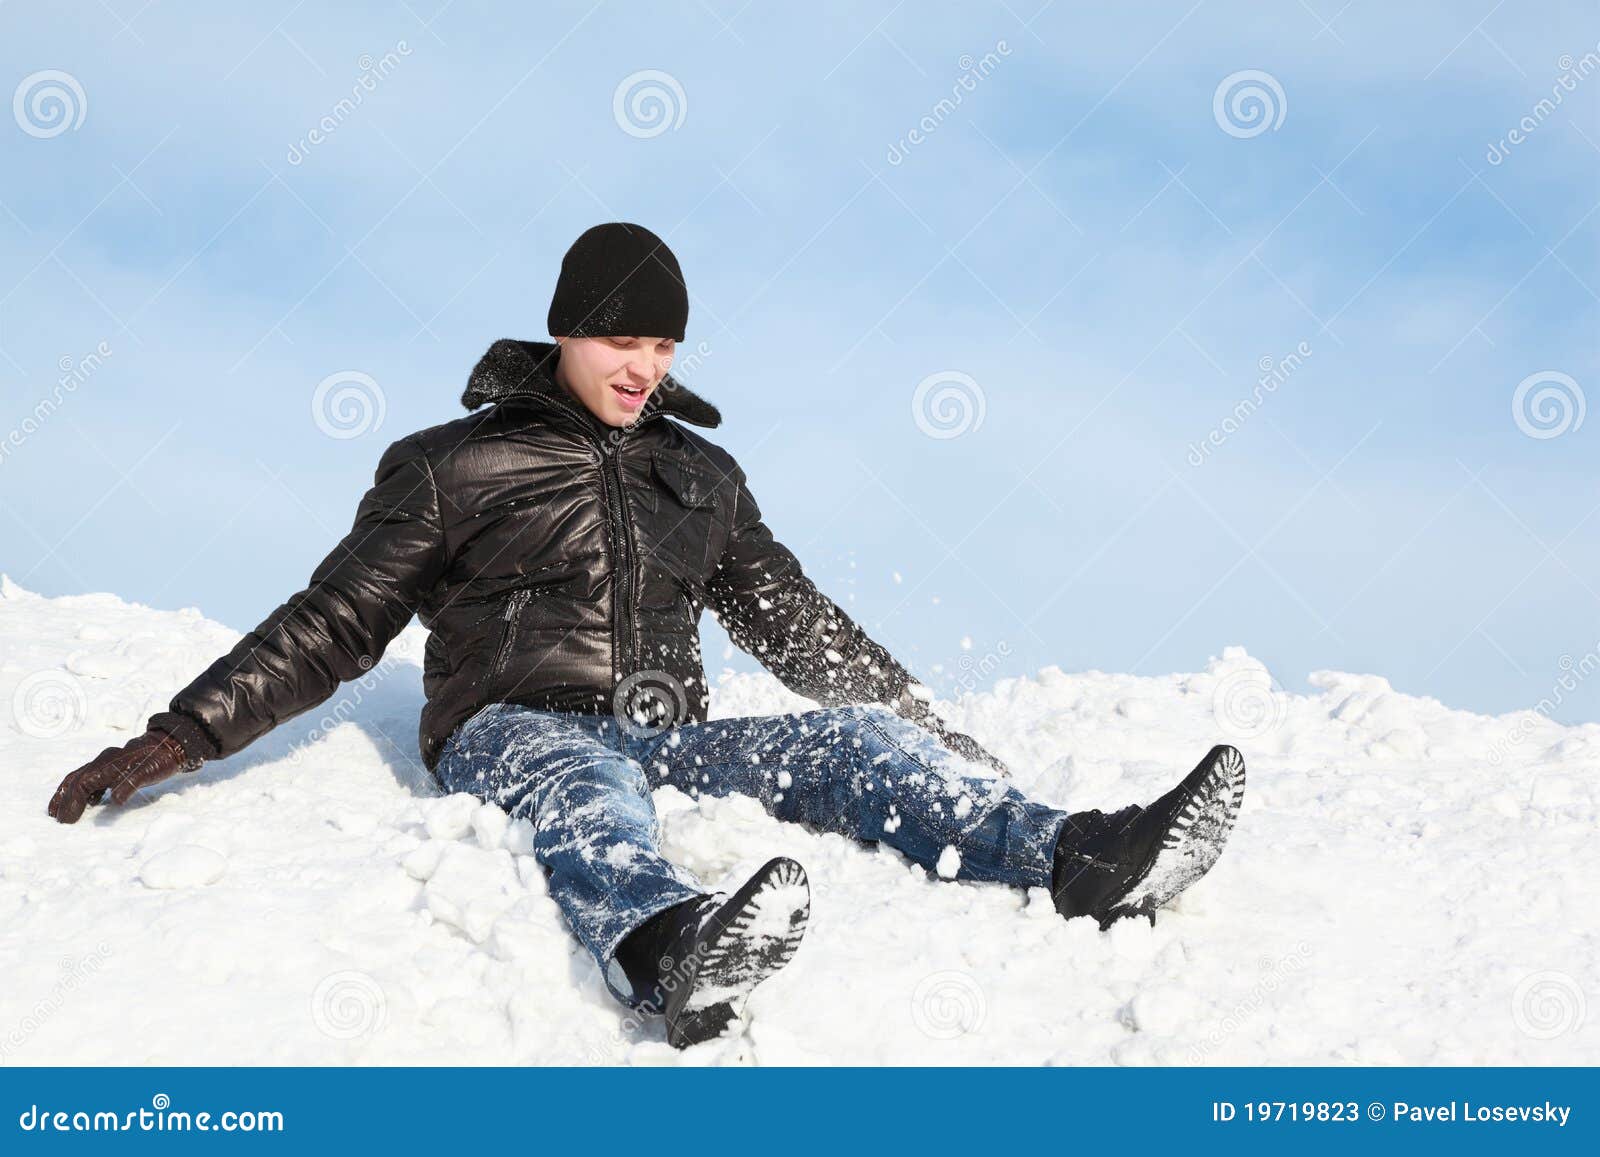 Сидит сугробе. Сидит в снегу. Человек сидит на снегу. Парень сидит на снегу. Сидит в сугробе.